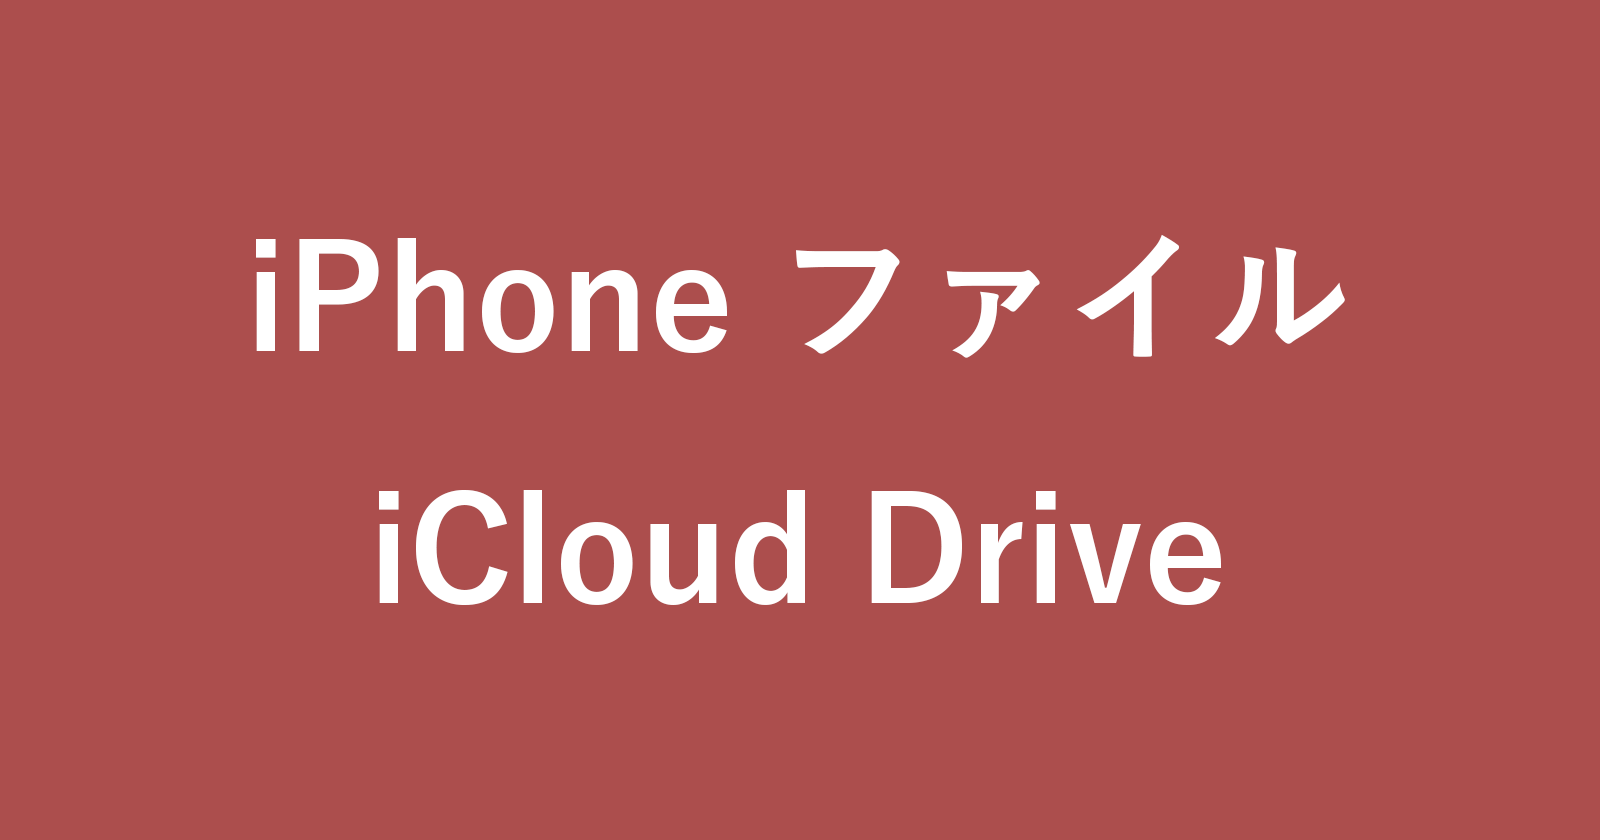 iphone save icloud drive